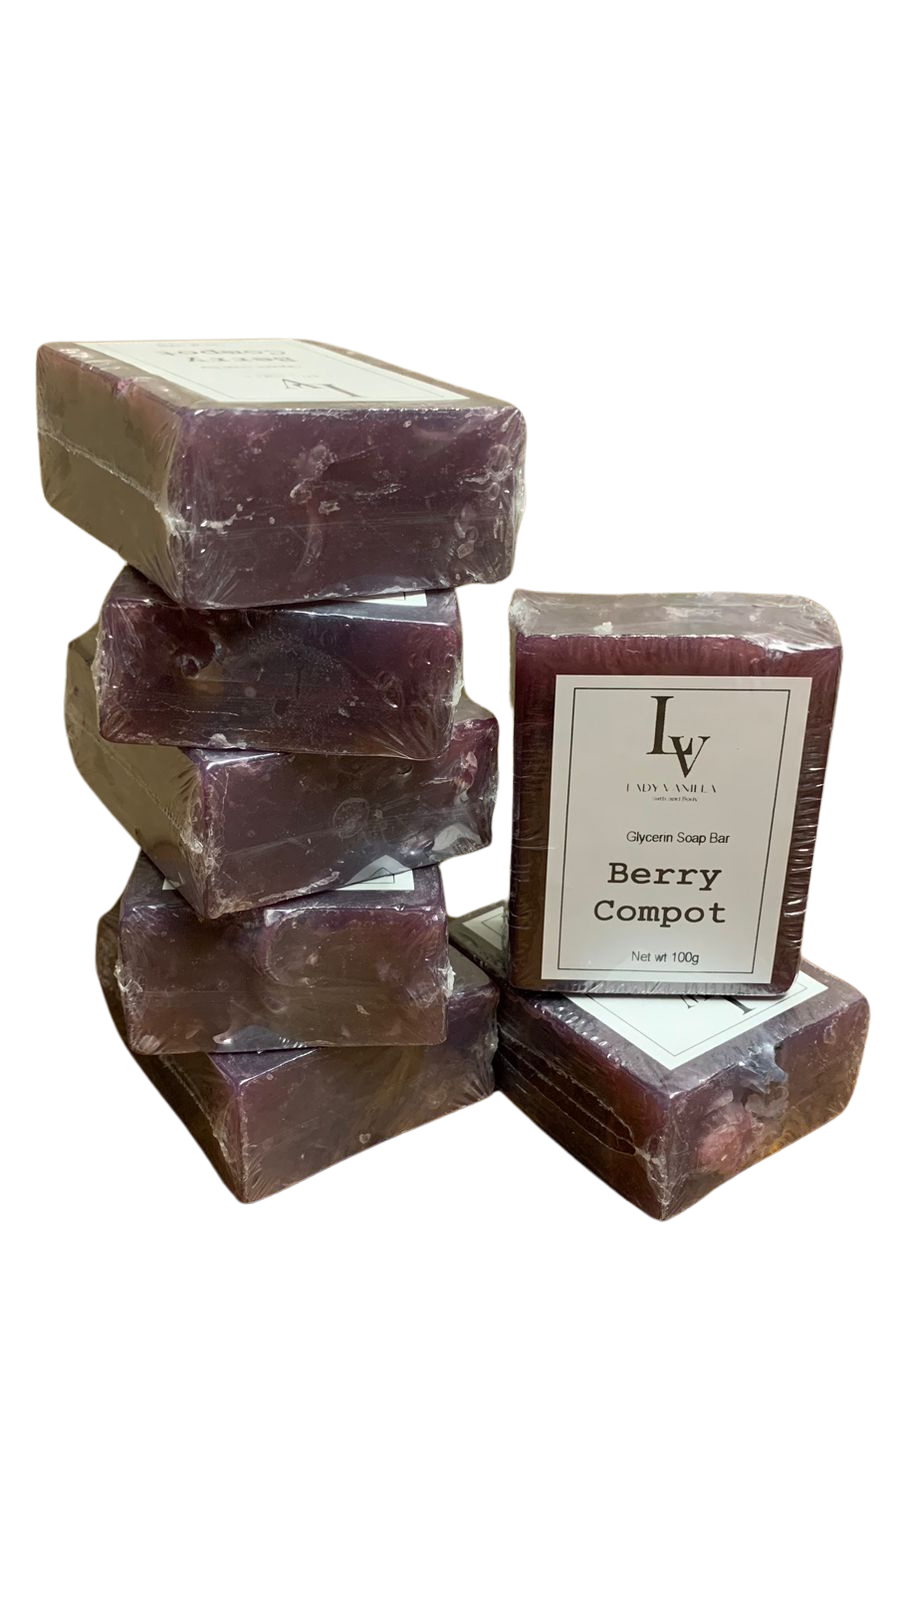 Berry Compot Glycerin Soap Bar